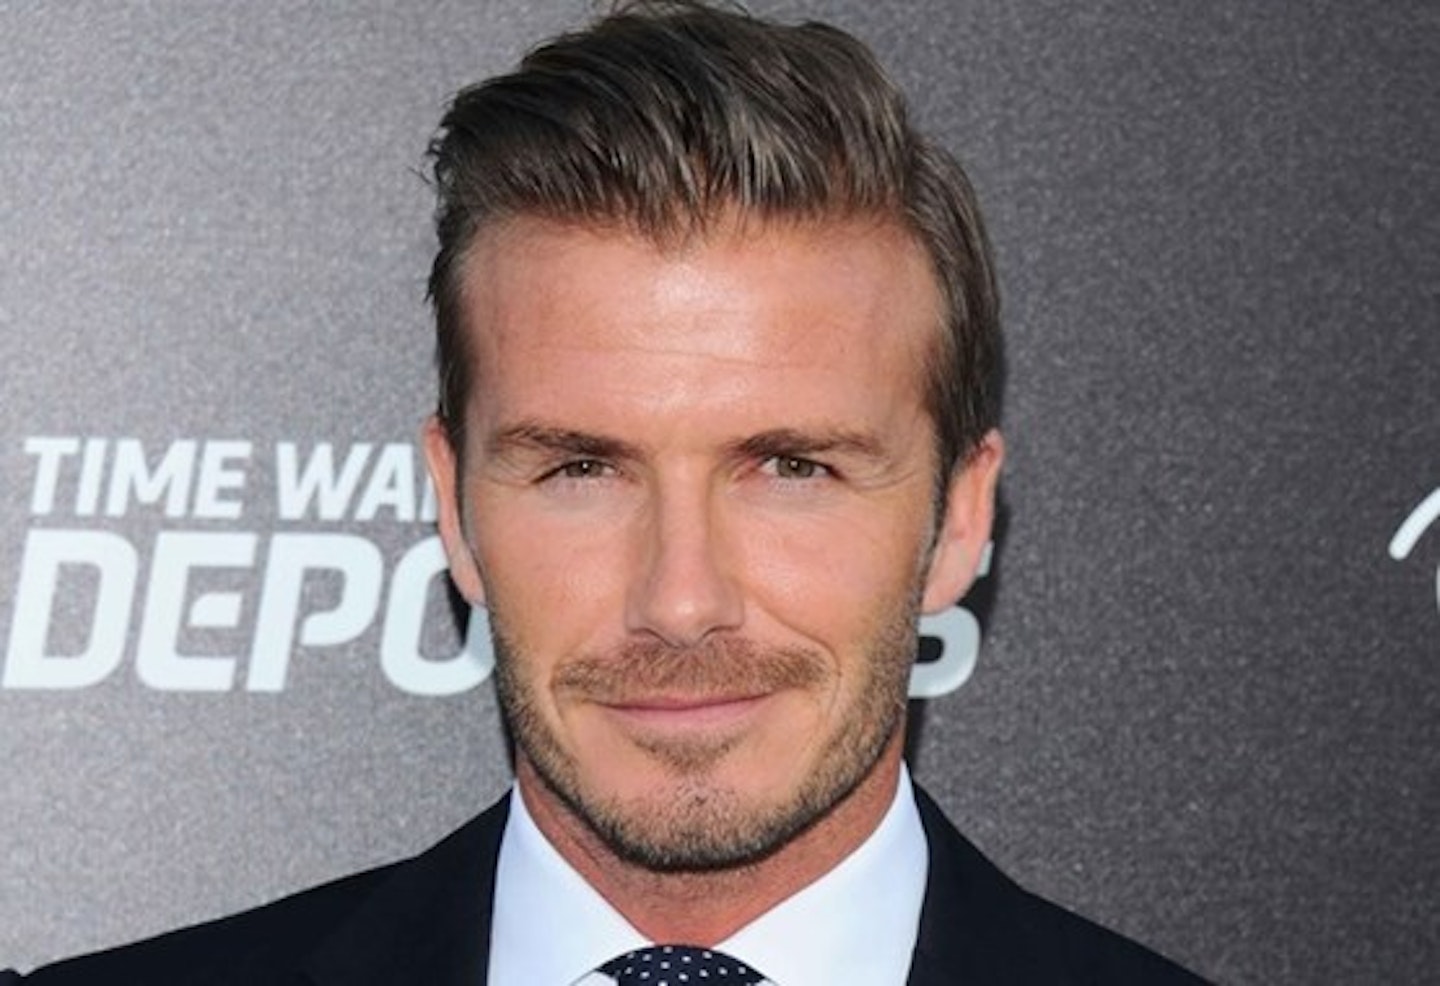 An image of David Beckham